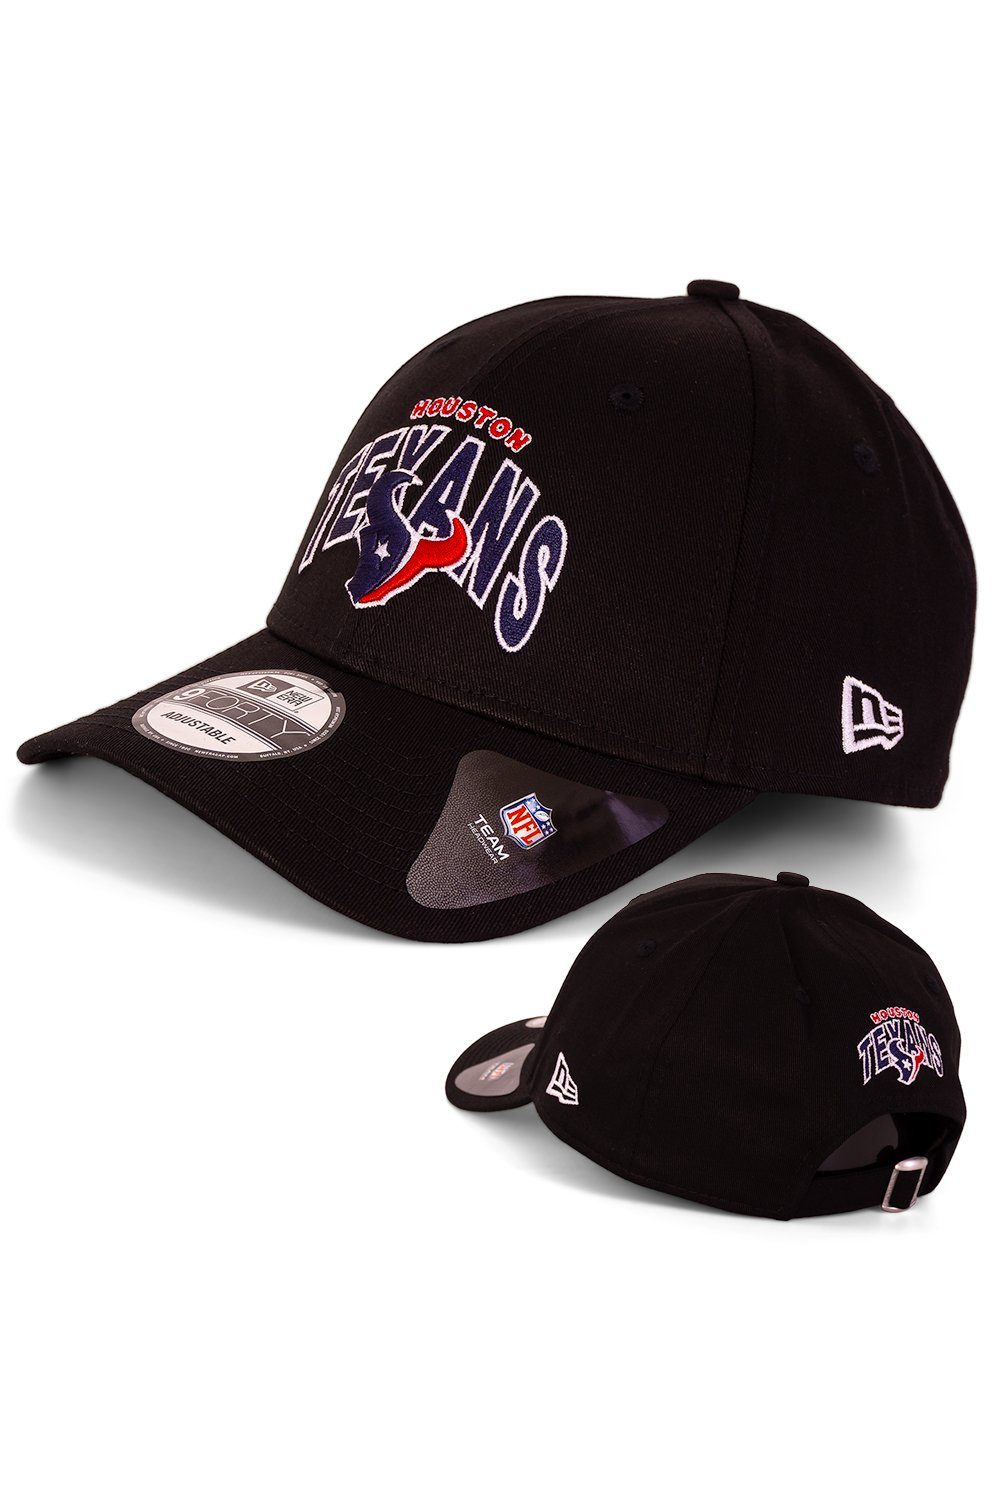 Cap Era Cap Houston New Texans League Era 940 New (1-St) HouTex Baseball